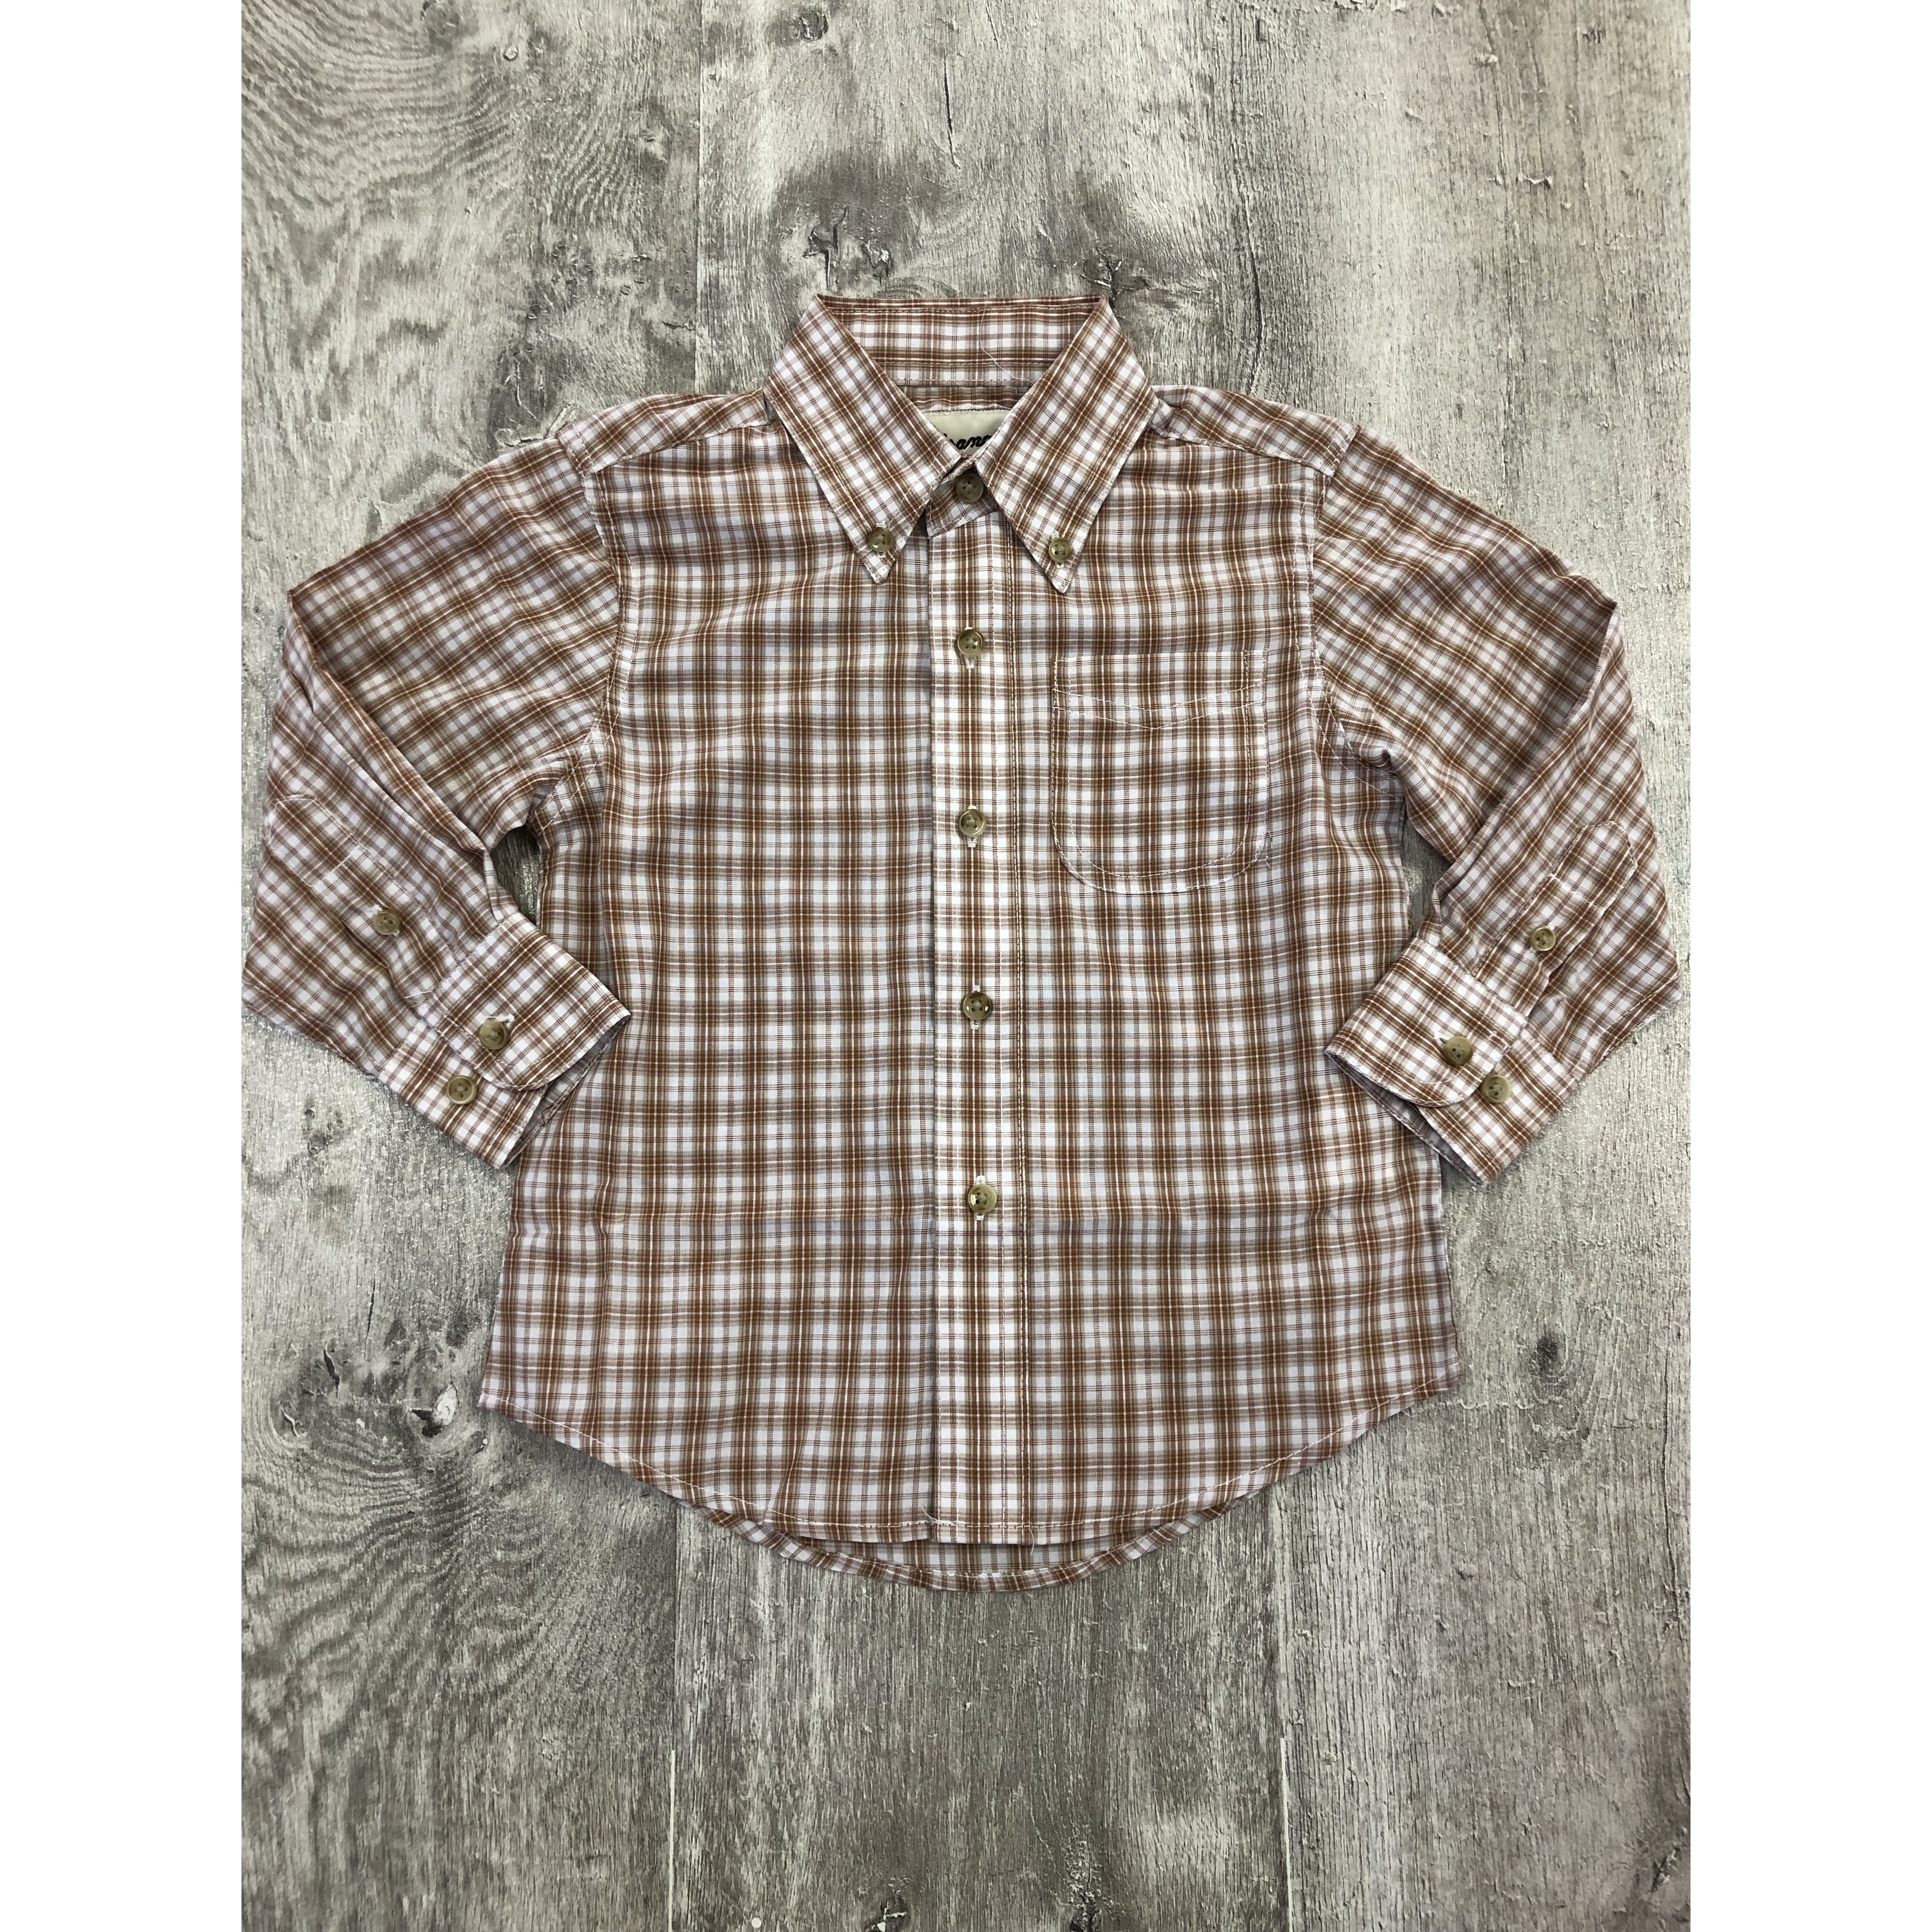 Wrangler Boy's Riata Long Sleeve Plaid Button Up Shirt - Brown-Wrangler-Little Giant Kidz